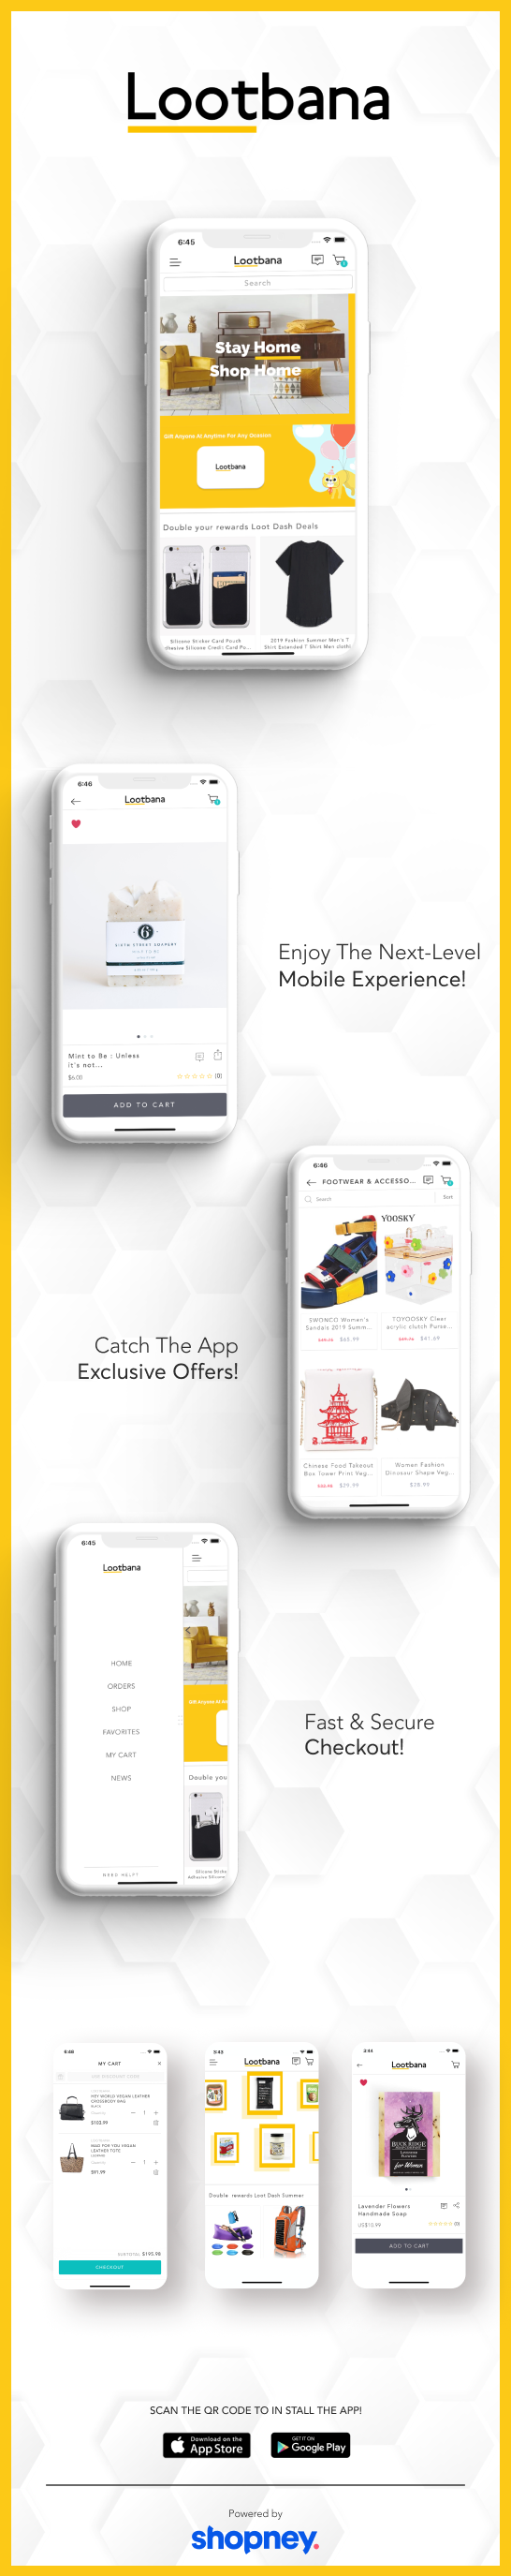 the mobile app design of Lootbana app